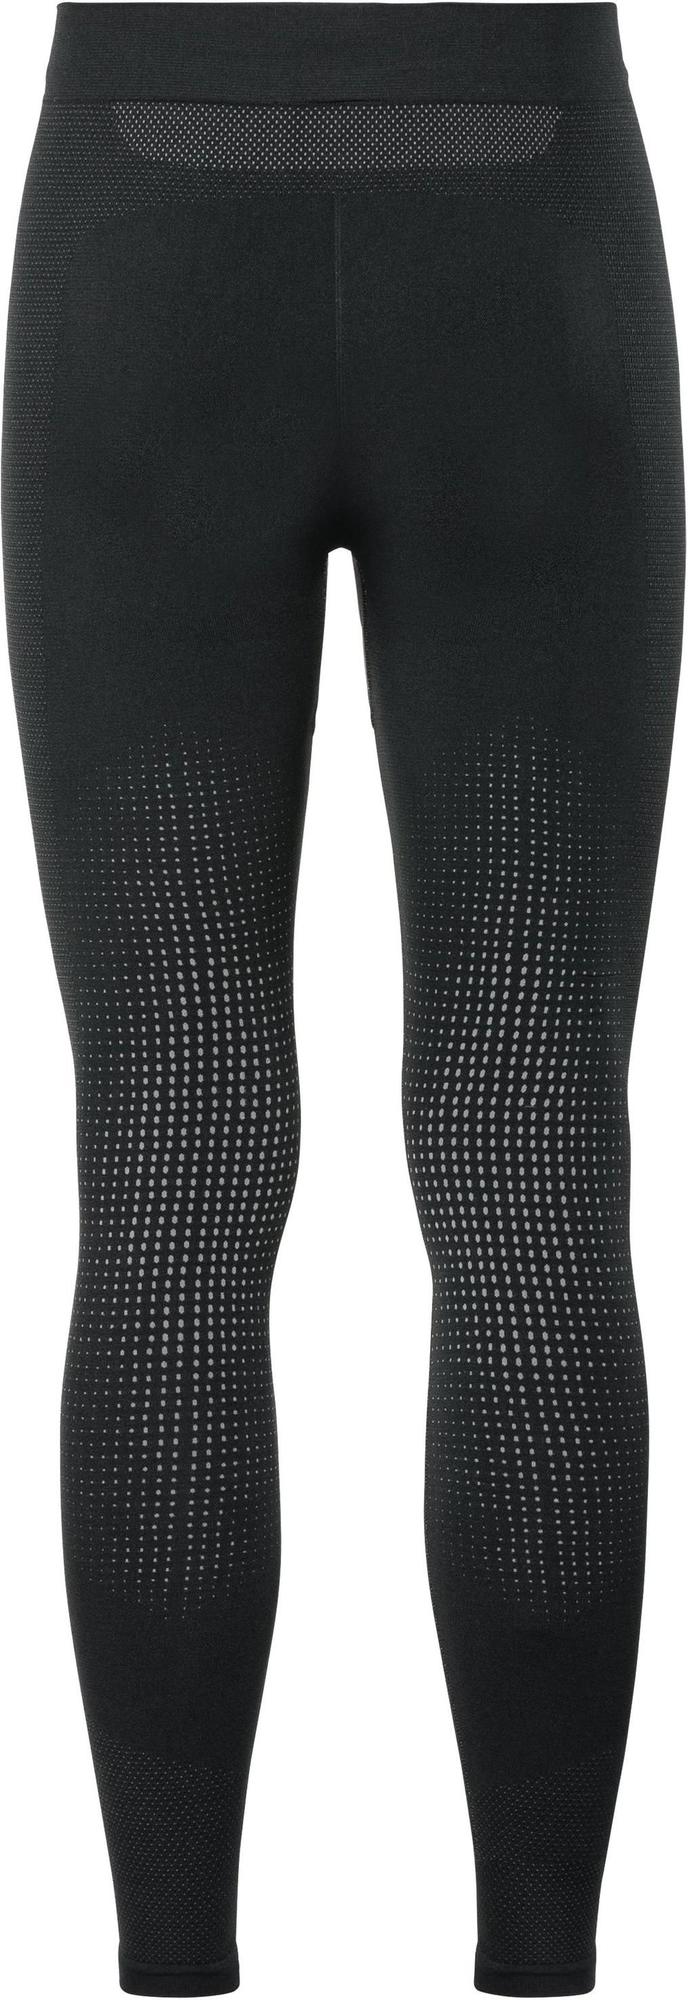 Odlo Men's Performance Warm Base Layer Pants | SportFits Shop